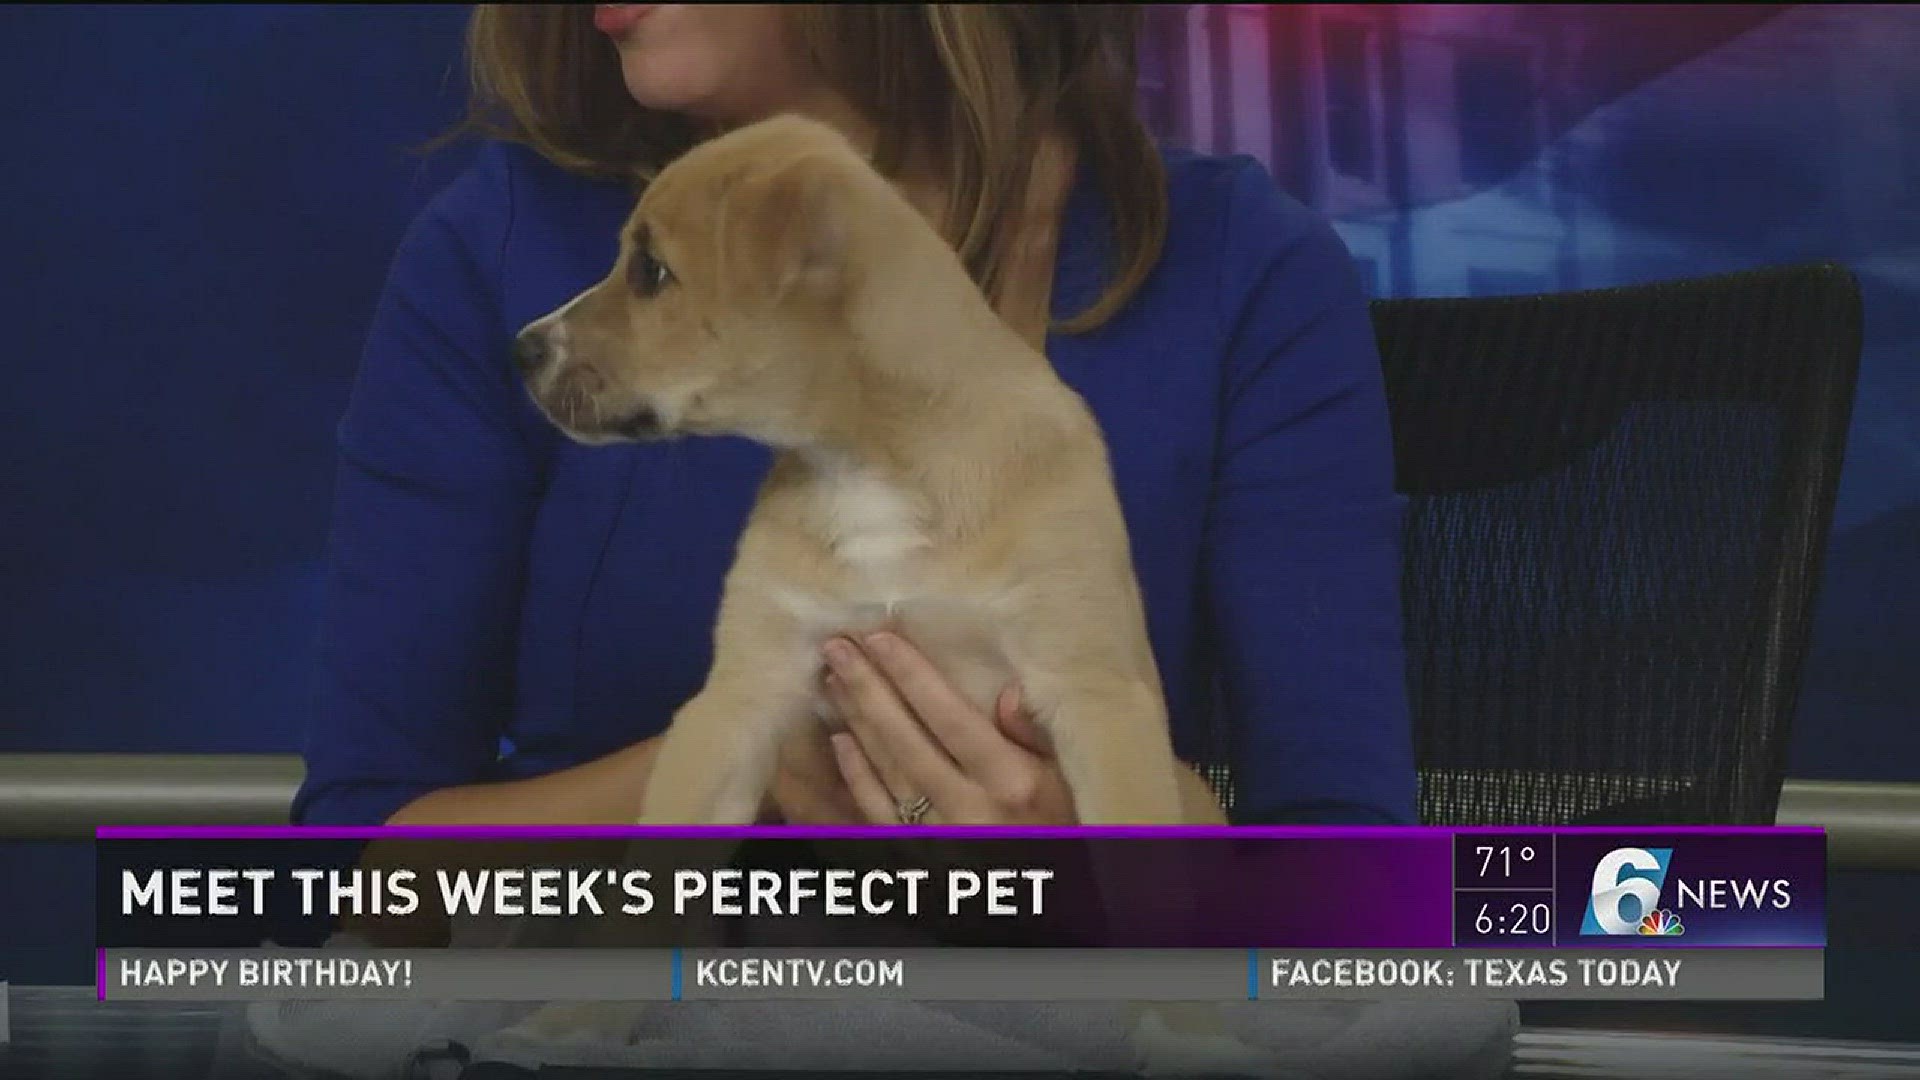 meet this week's perfect pet